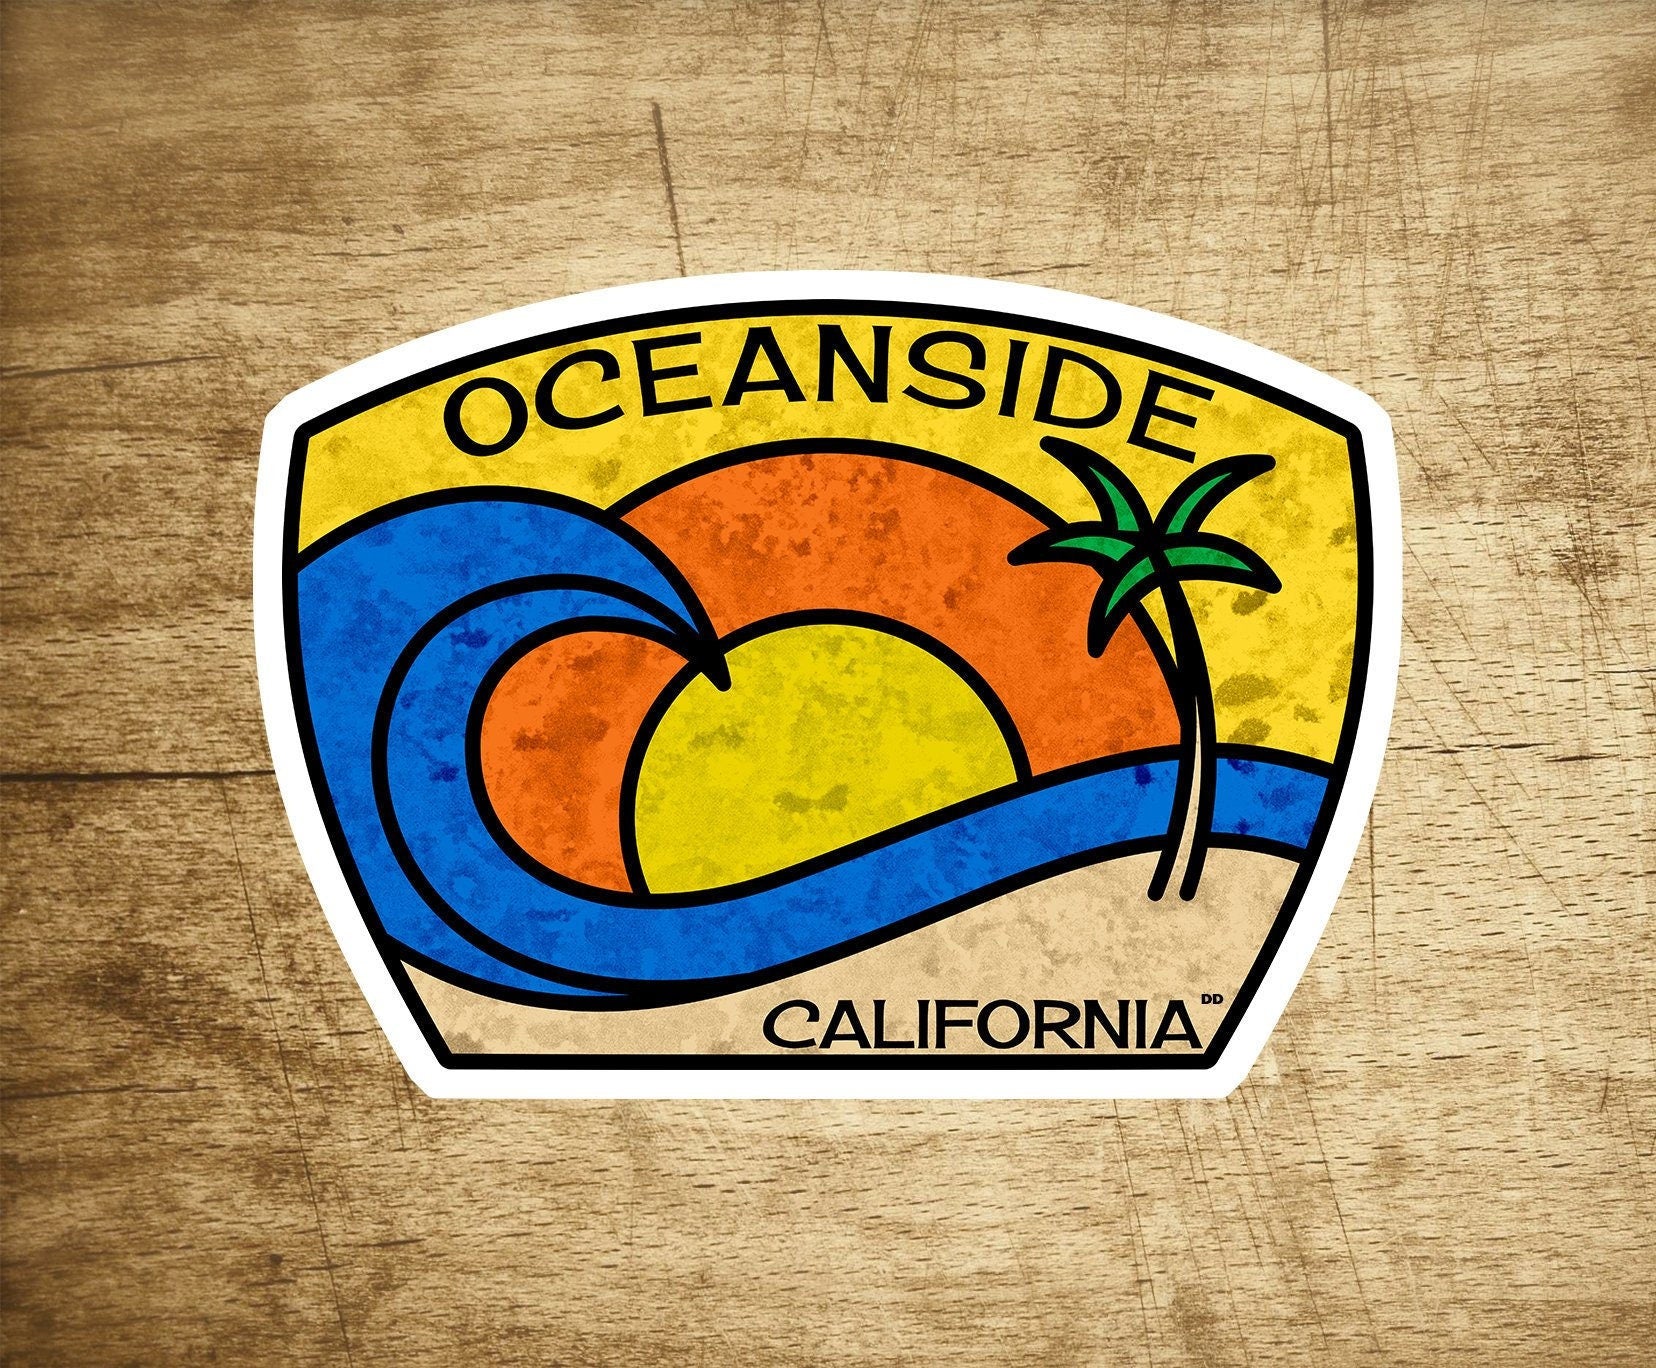 Oceanside California Decal Sticker 3.75" X 2.75" Los Angeles Pacific Ocean